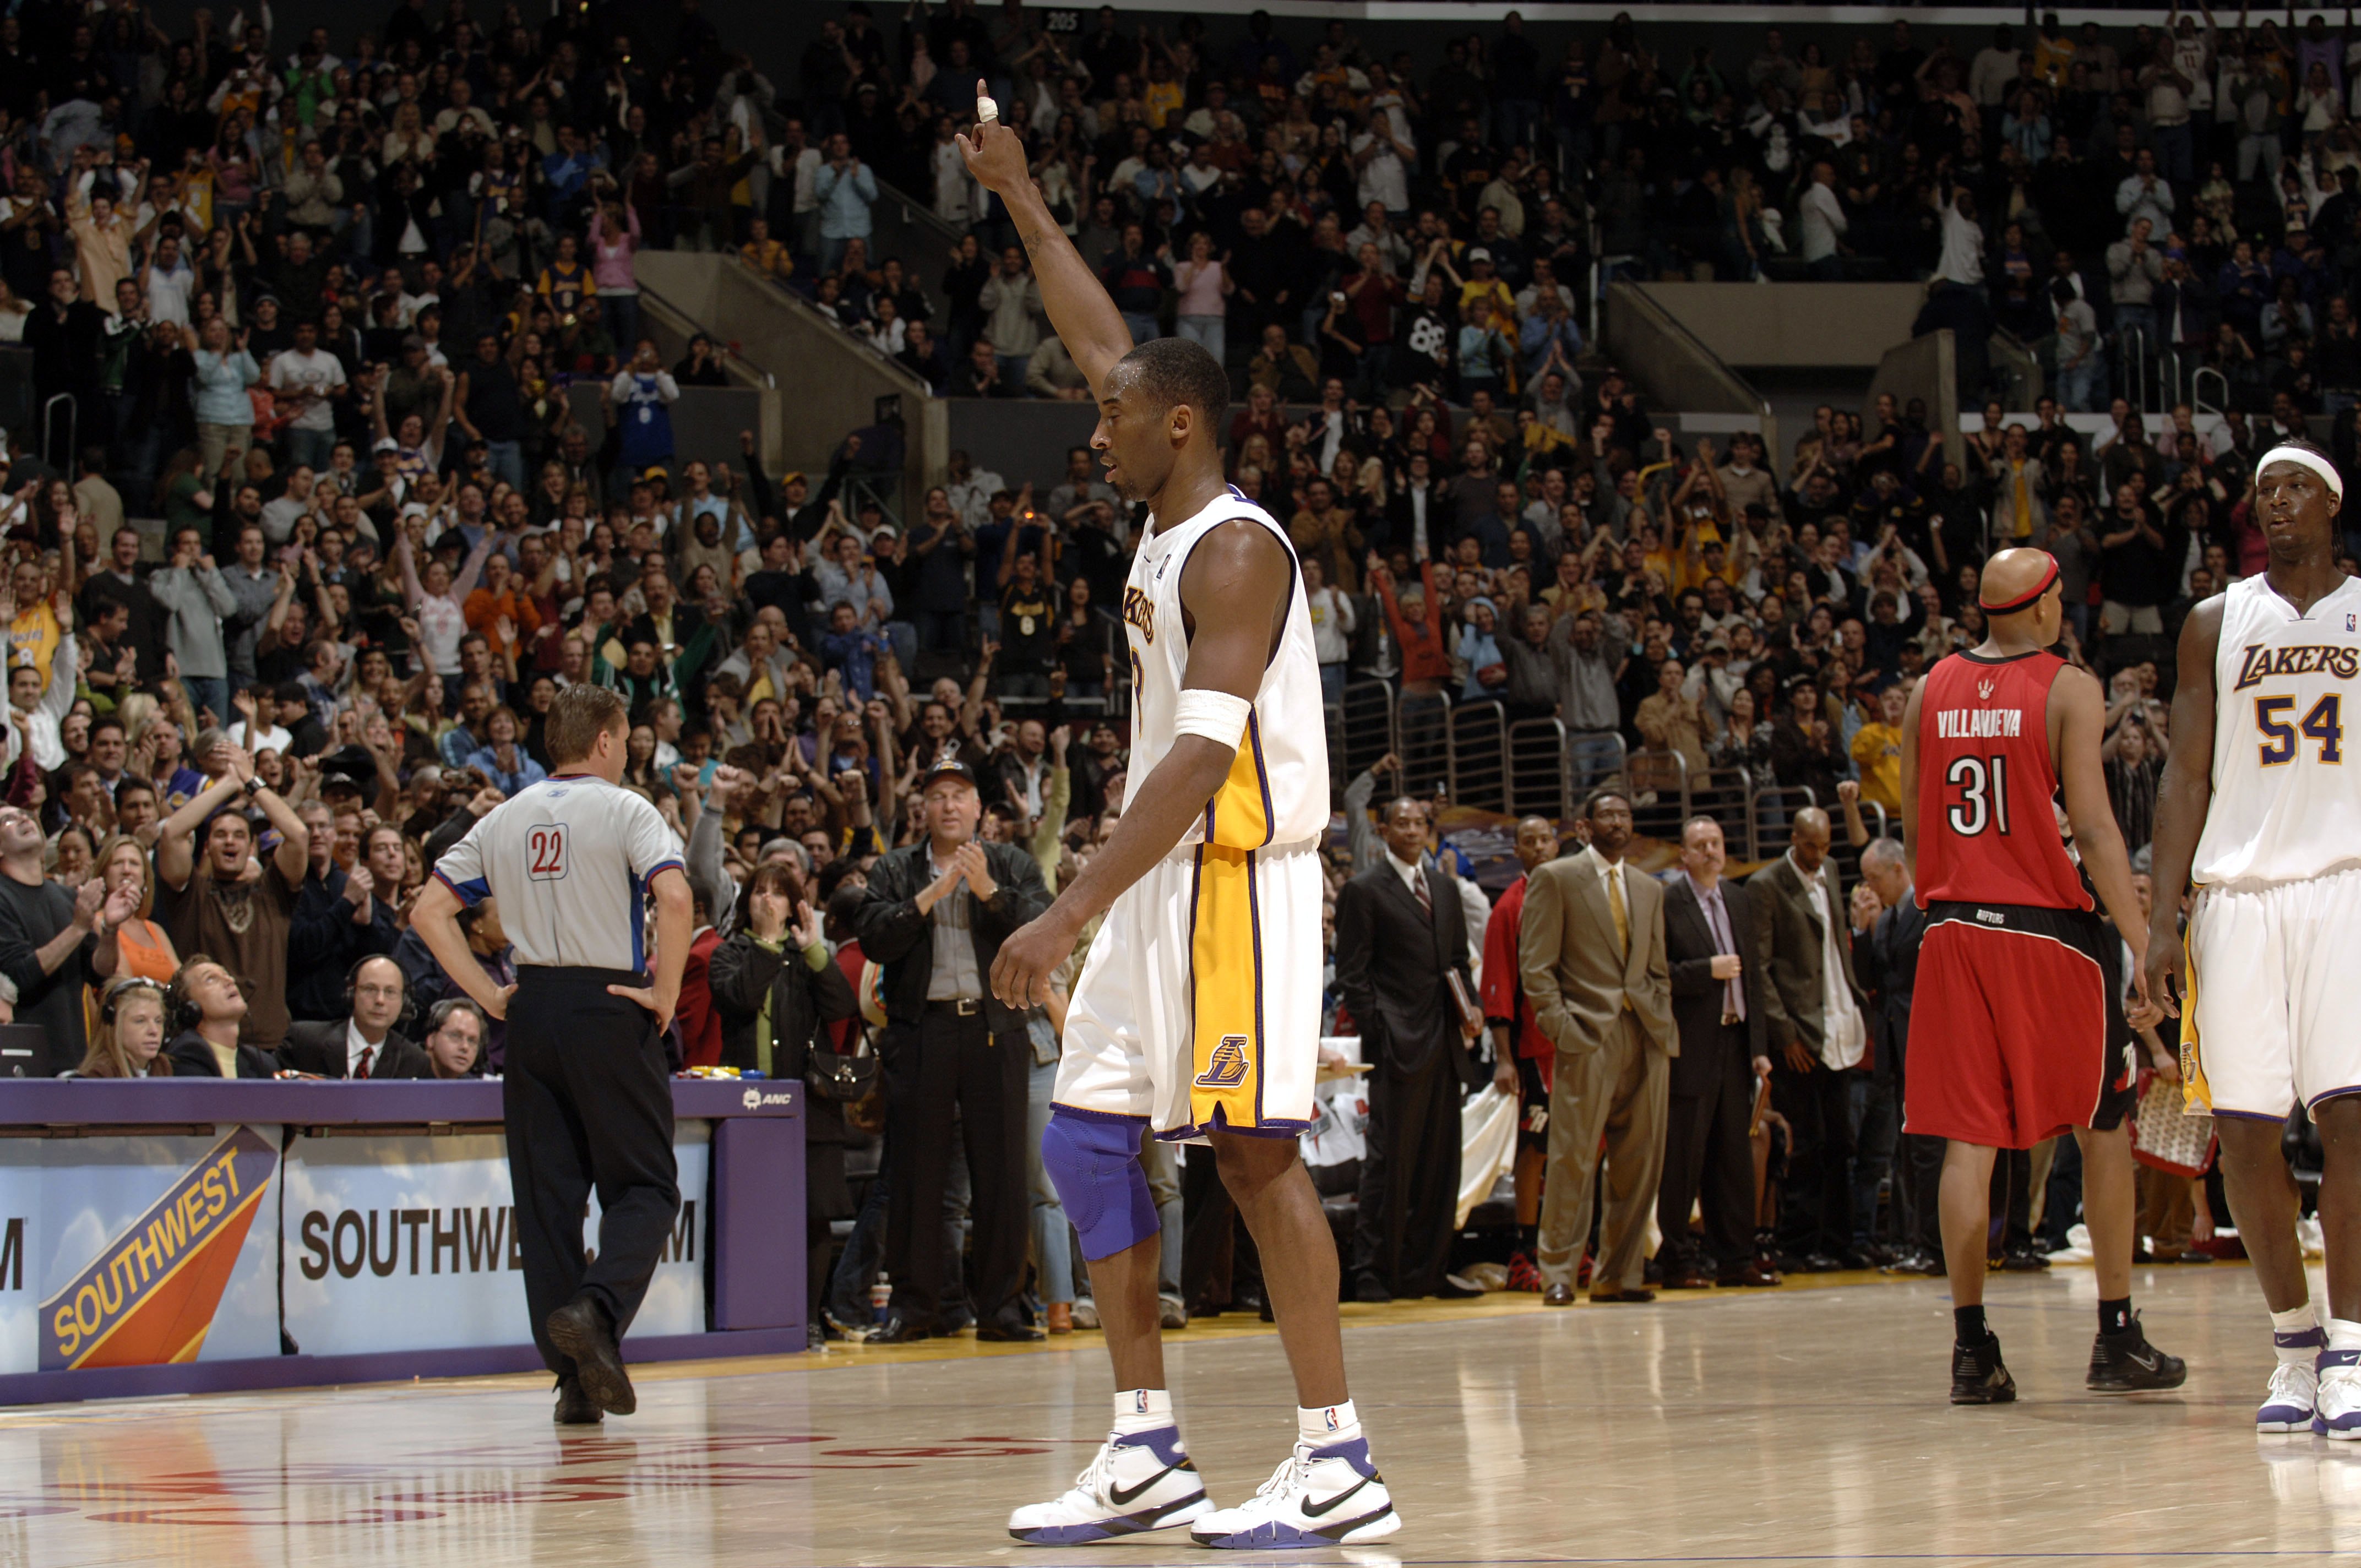 ESPN Stats & Info on X: Kobe Bryant: 5-time NBA champion, ranks